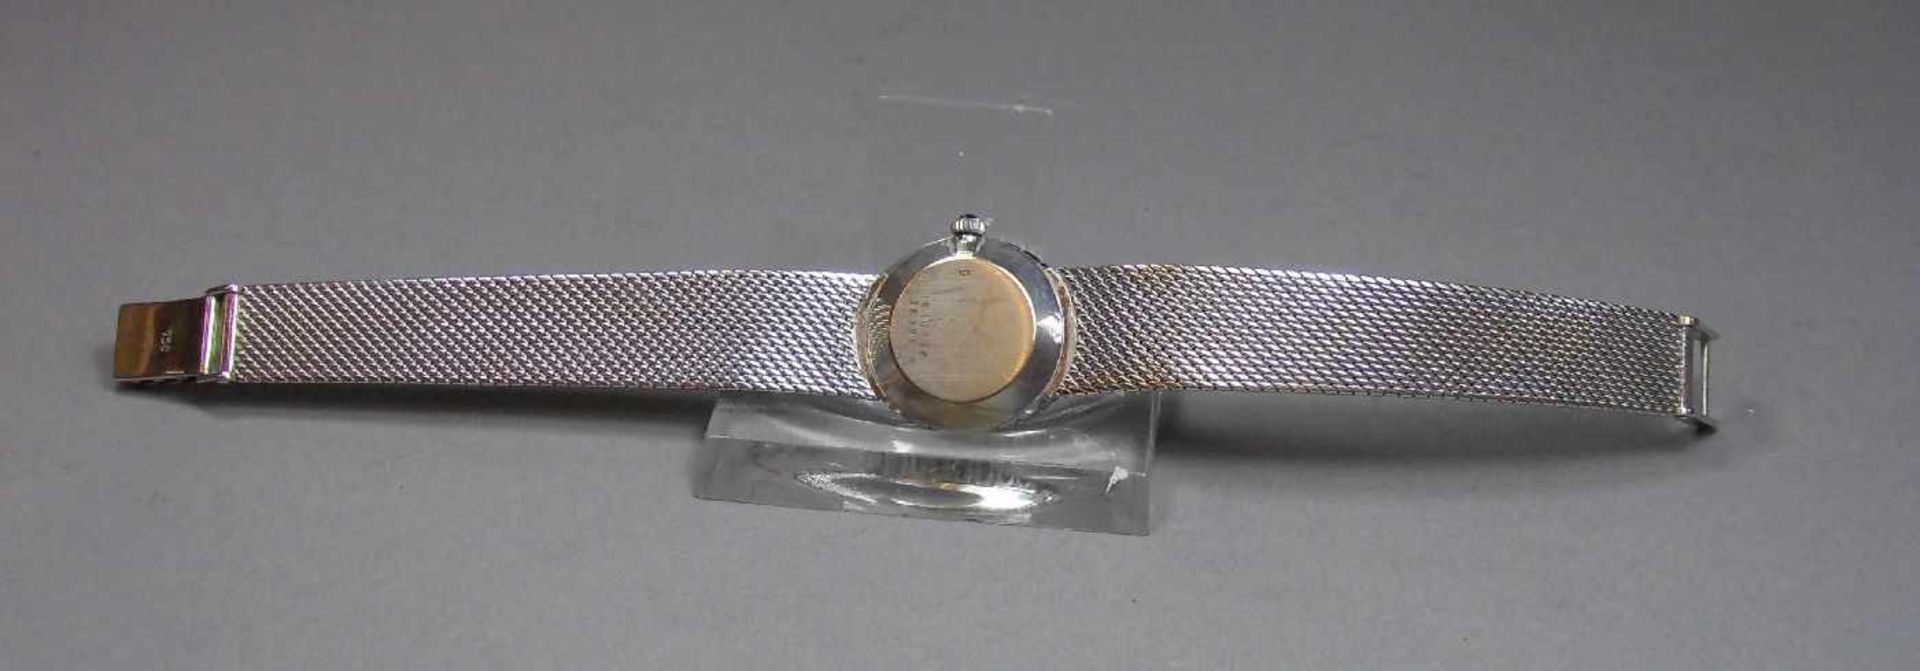 VINTAGE WEISSGOLD-ARMBANDUHR - BAUME & MERCIER GENEVE / wristwatch, Handaufzug, Manufaktur Baume & - Image 10 of 11